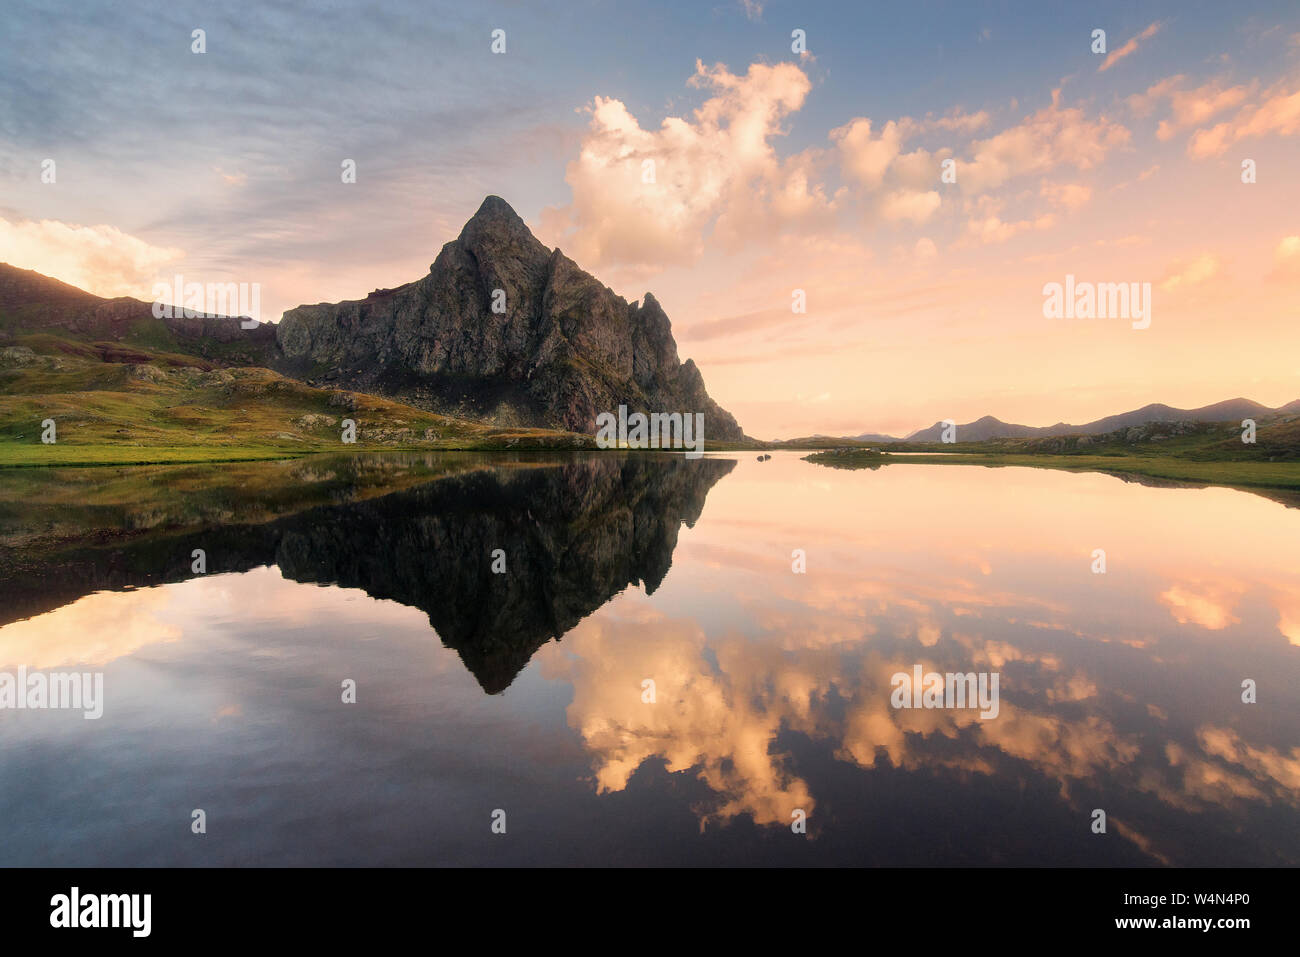 Anayet mountain reflected in Anayet lake at sunrise, Formigal, Huesca, spanish pyrenees Stock Photo